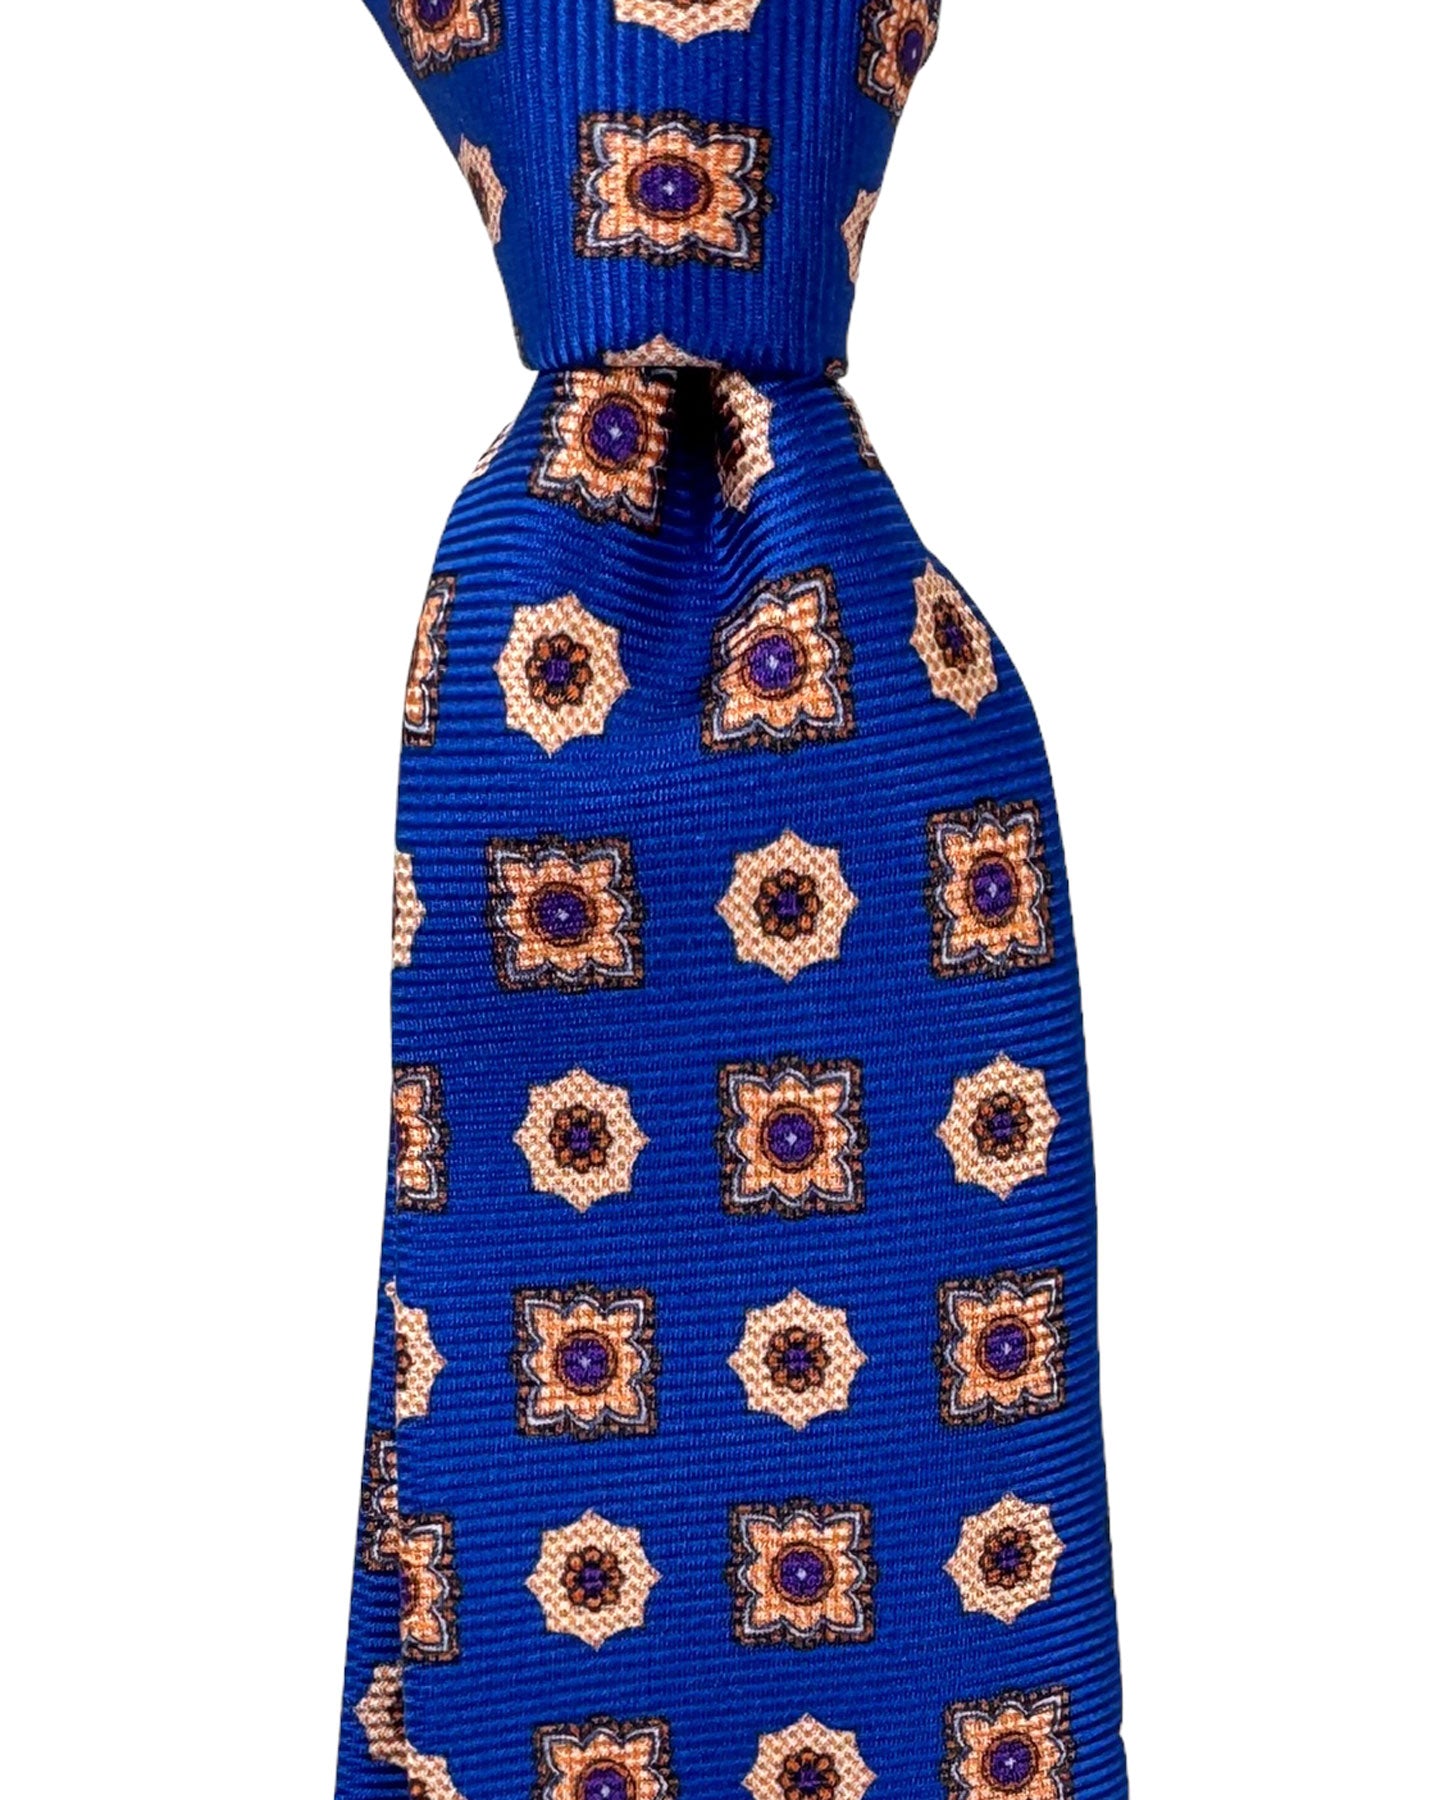 Kiton Tie Royal Blue Orange Floral - Sevenfold Necktie